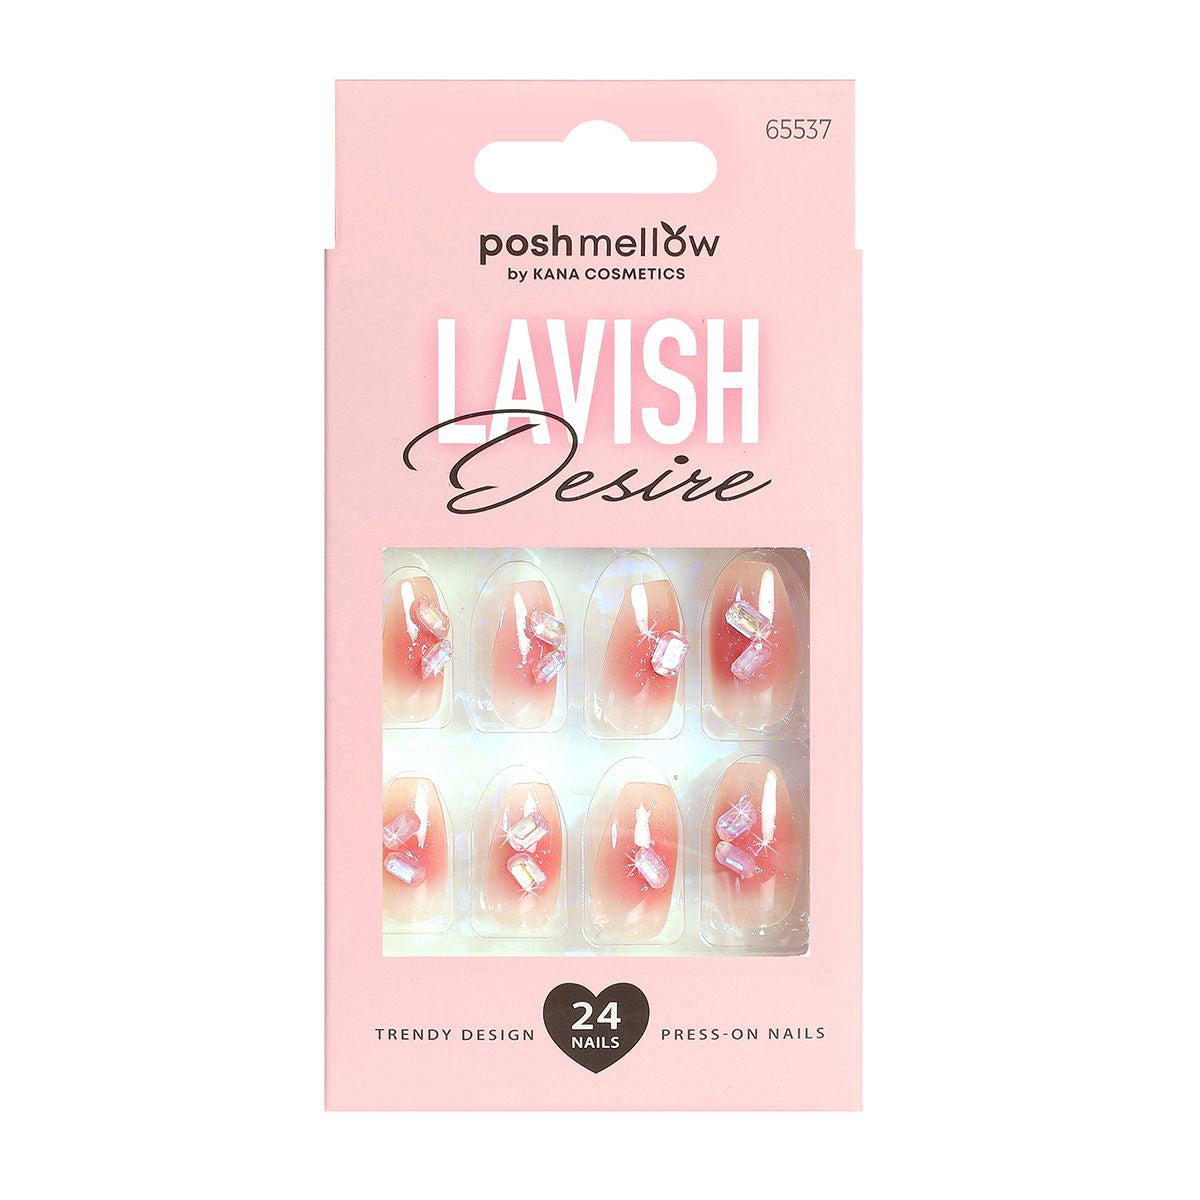 Lavish-Desire-Design-Nails-Press-on-Nails-